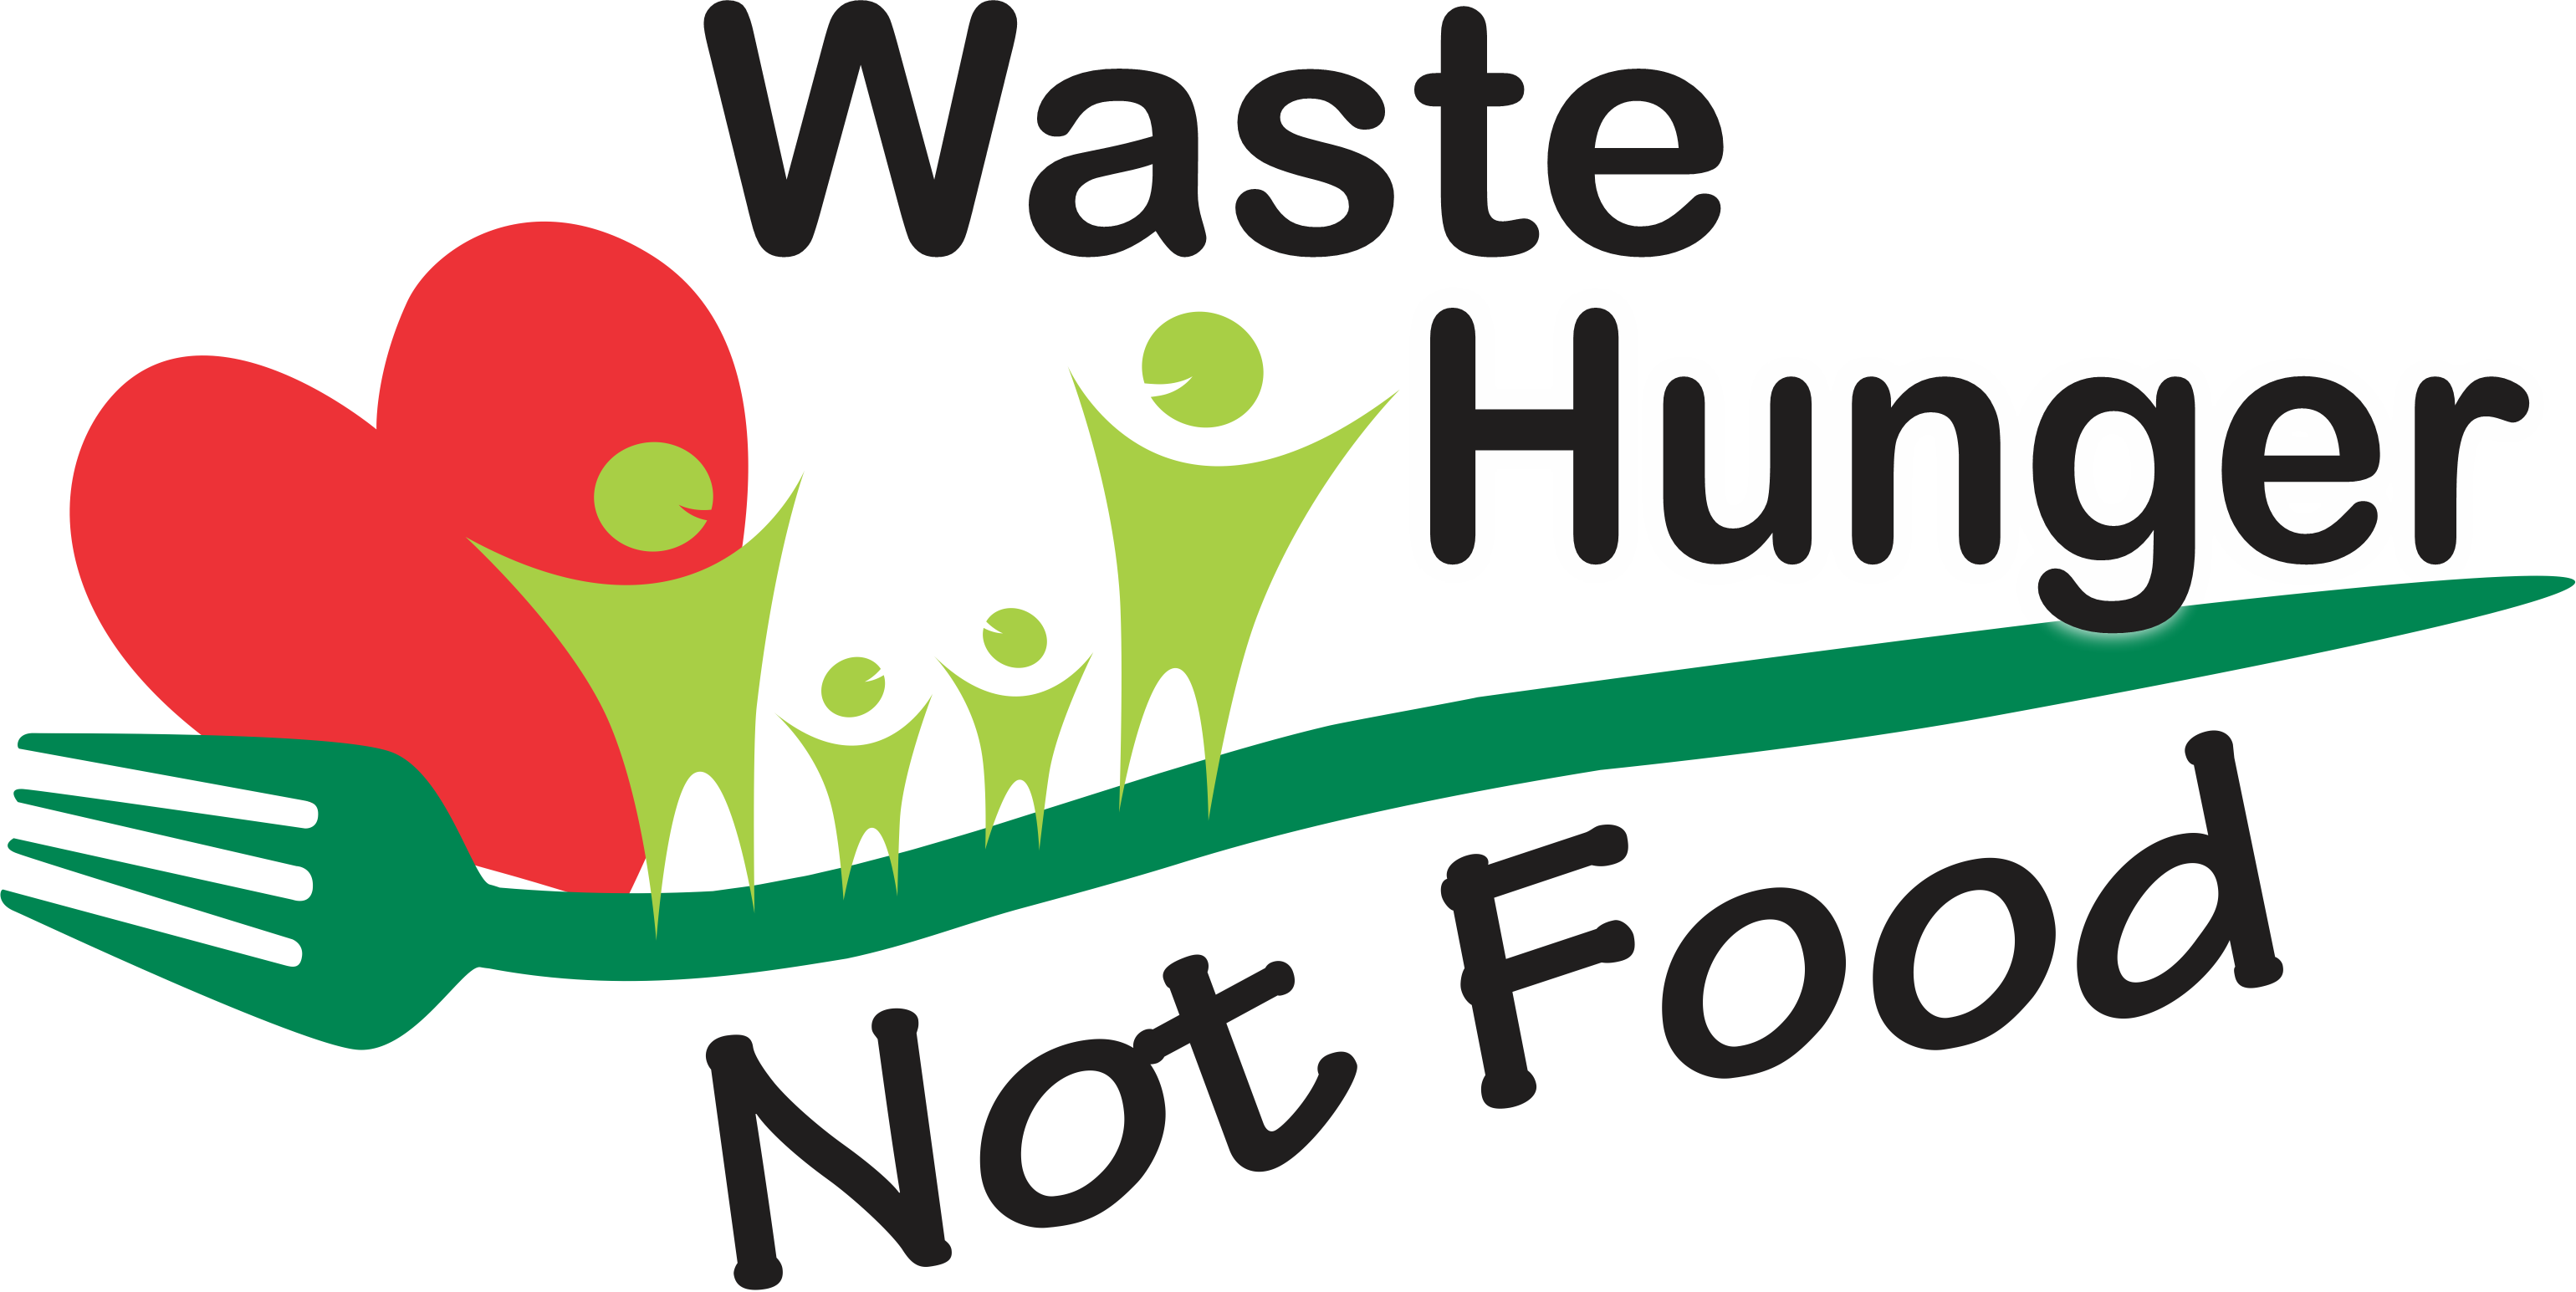 Waste Hunger Not Food